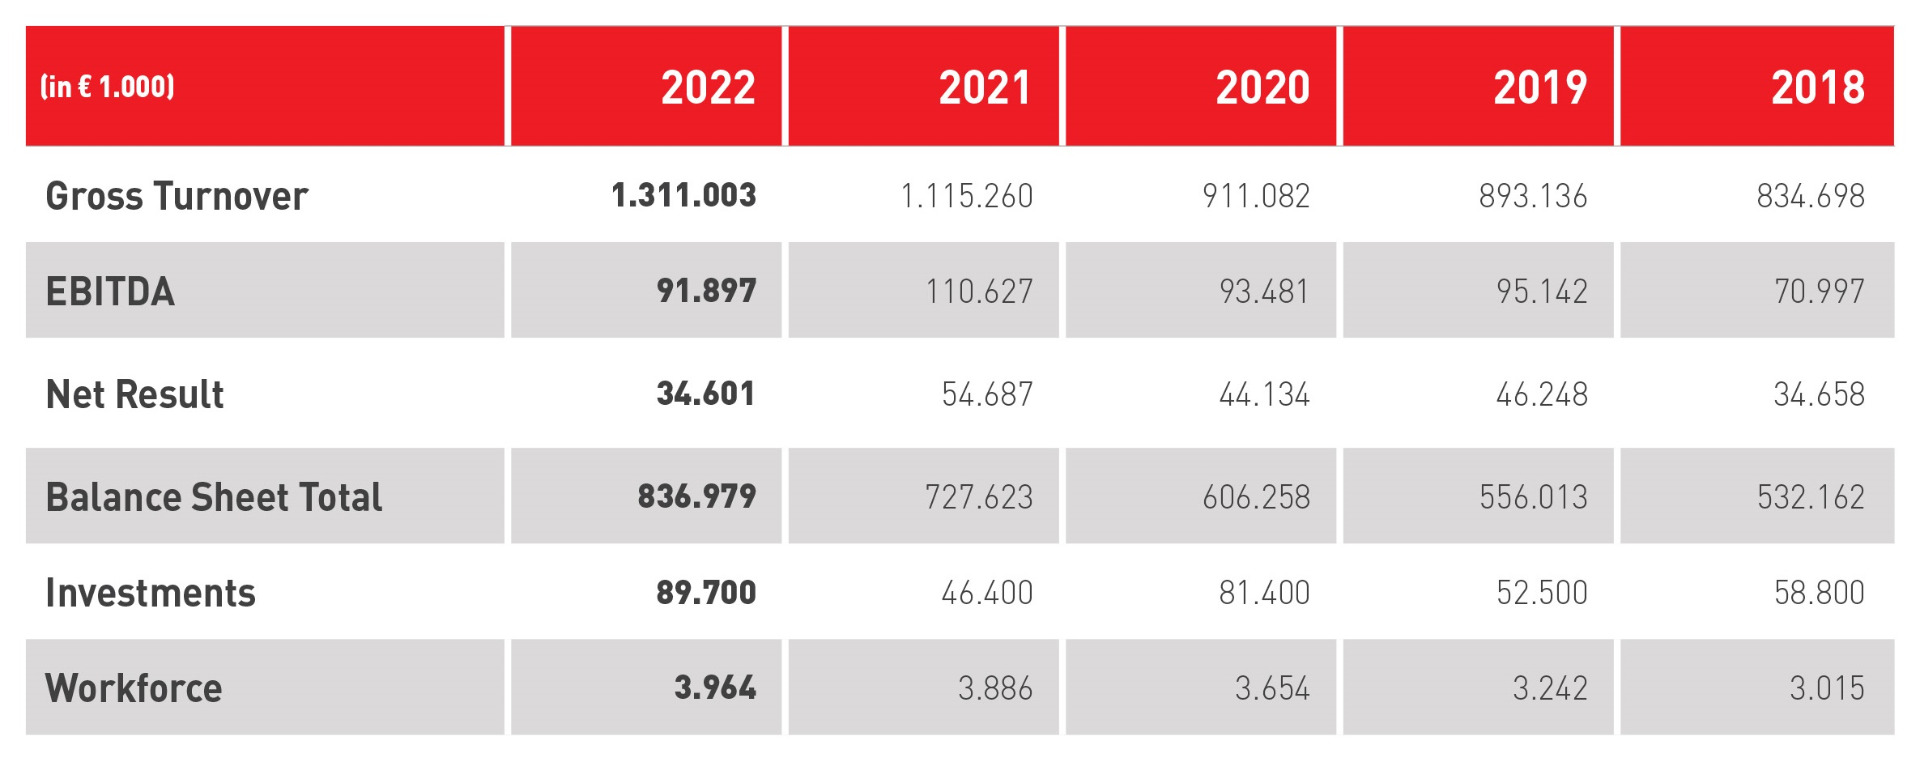 Key Financial Figures 2022